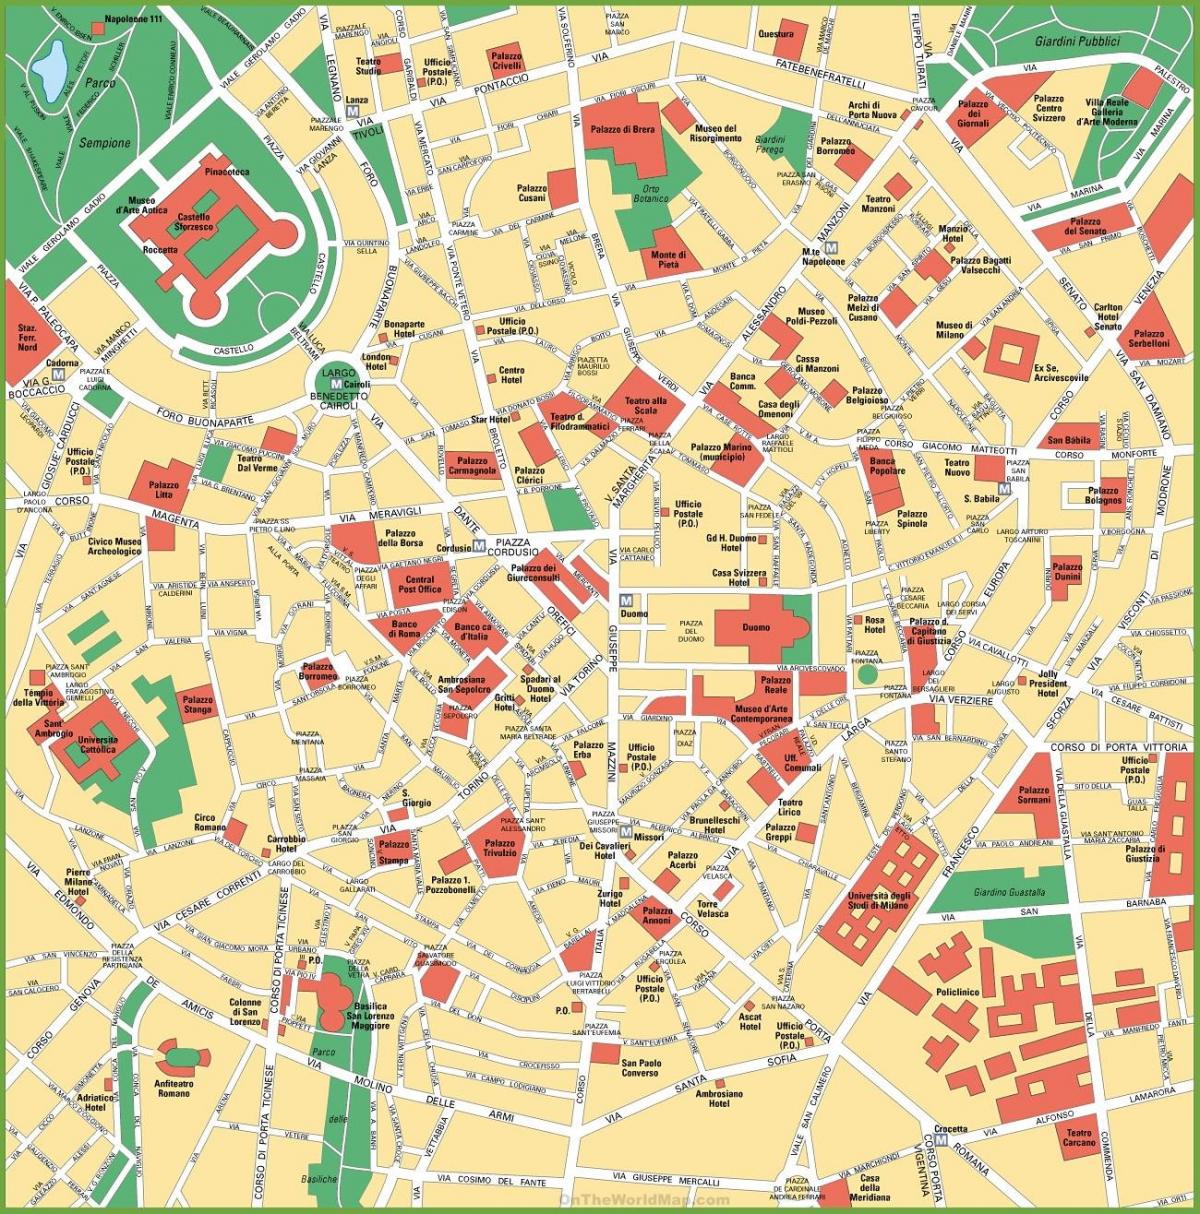 milano city-center kartta